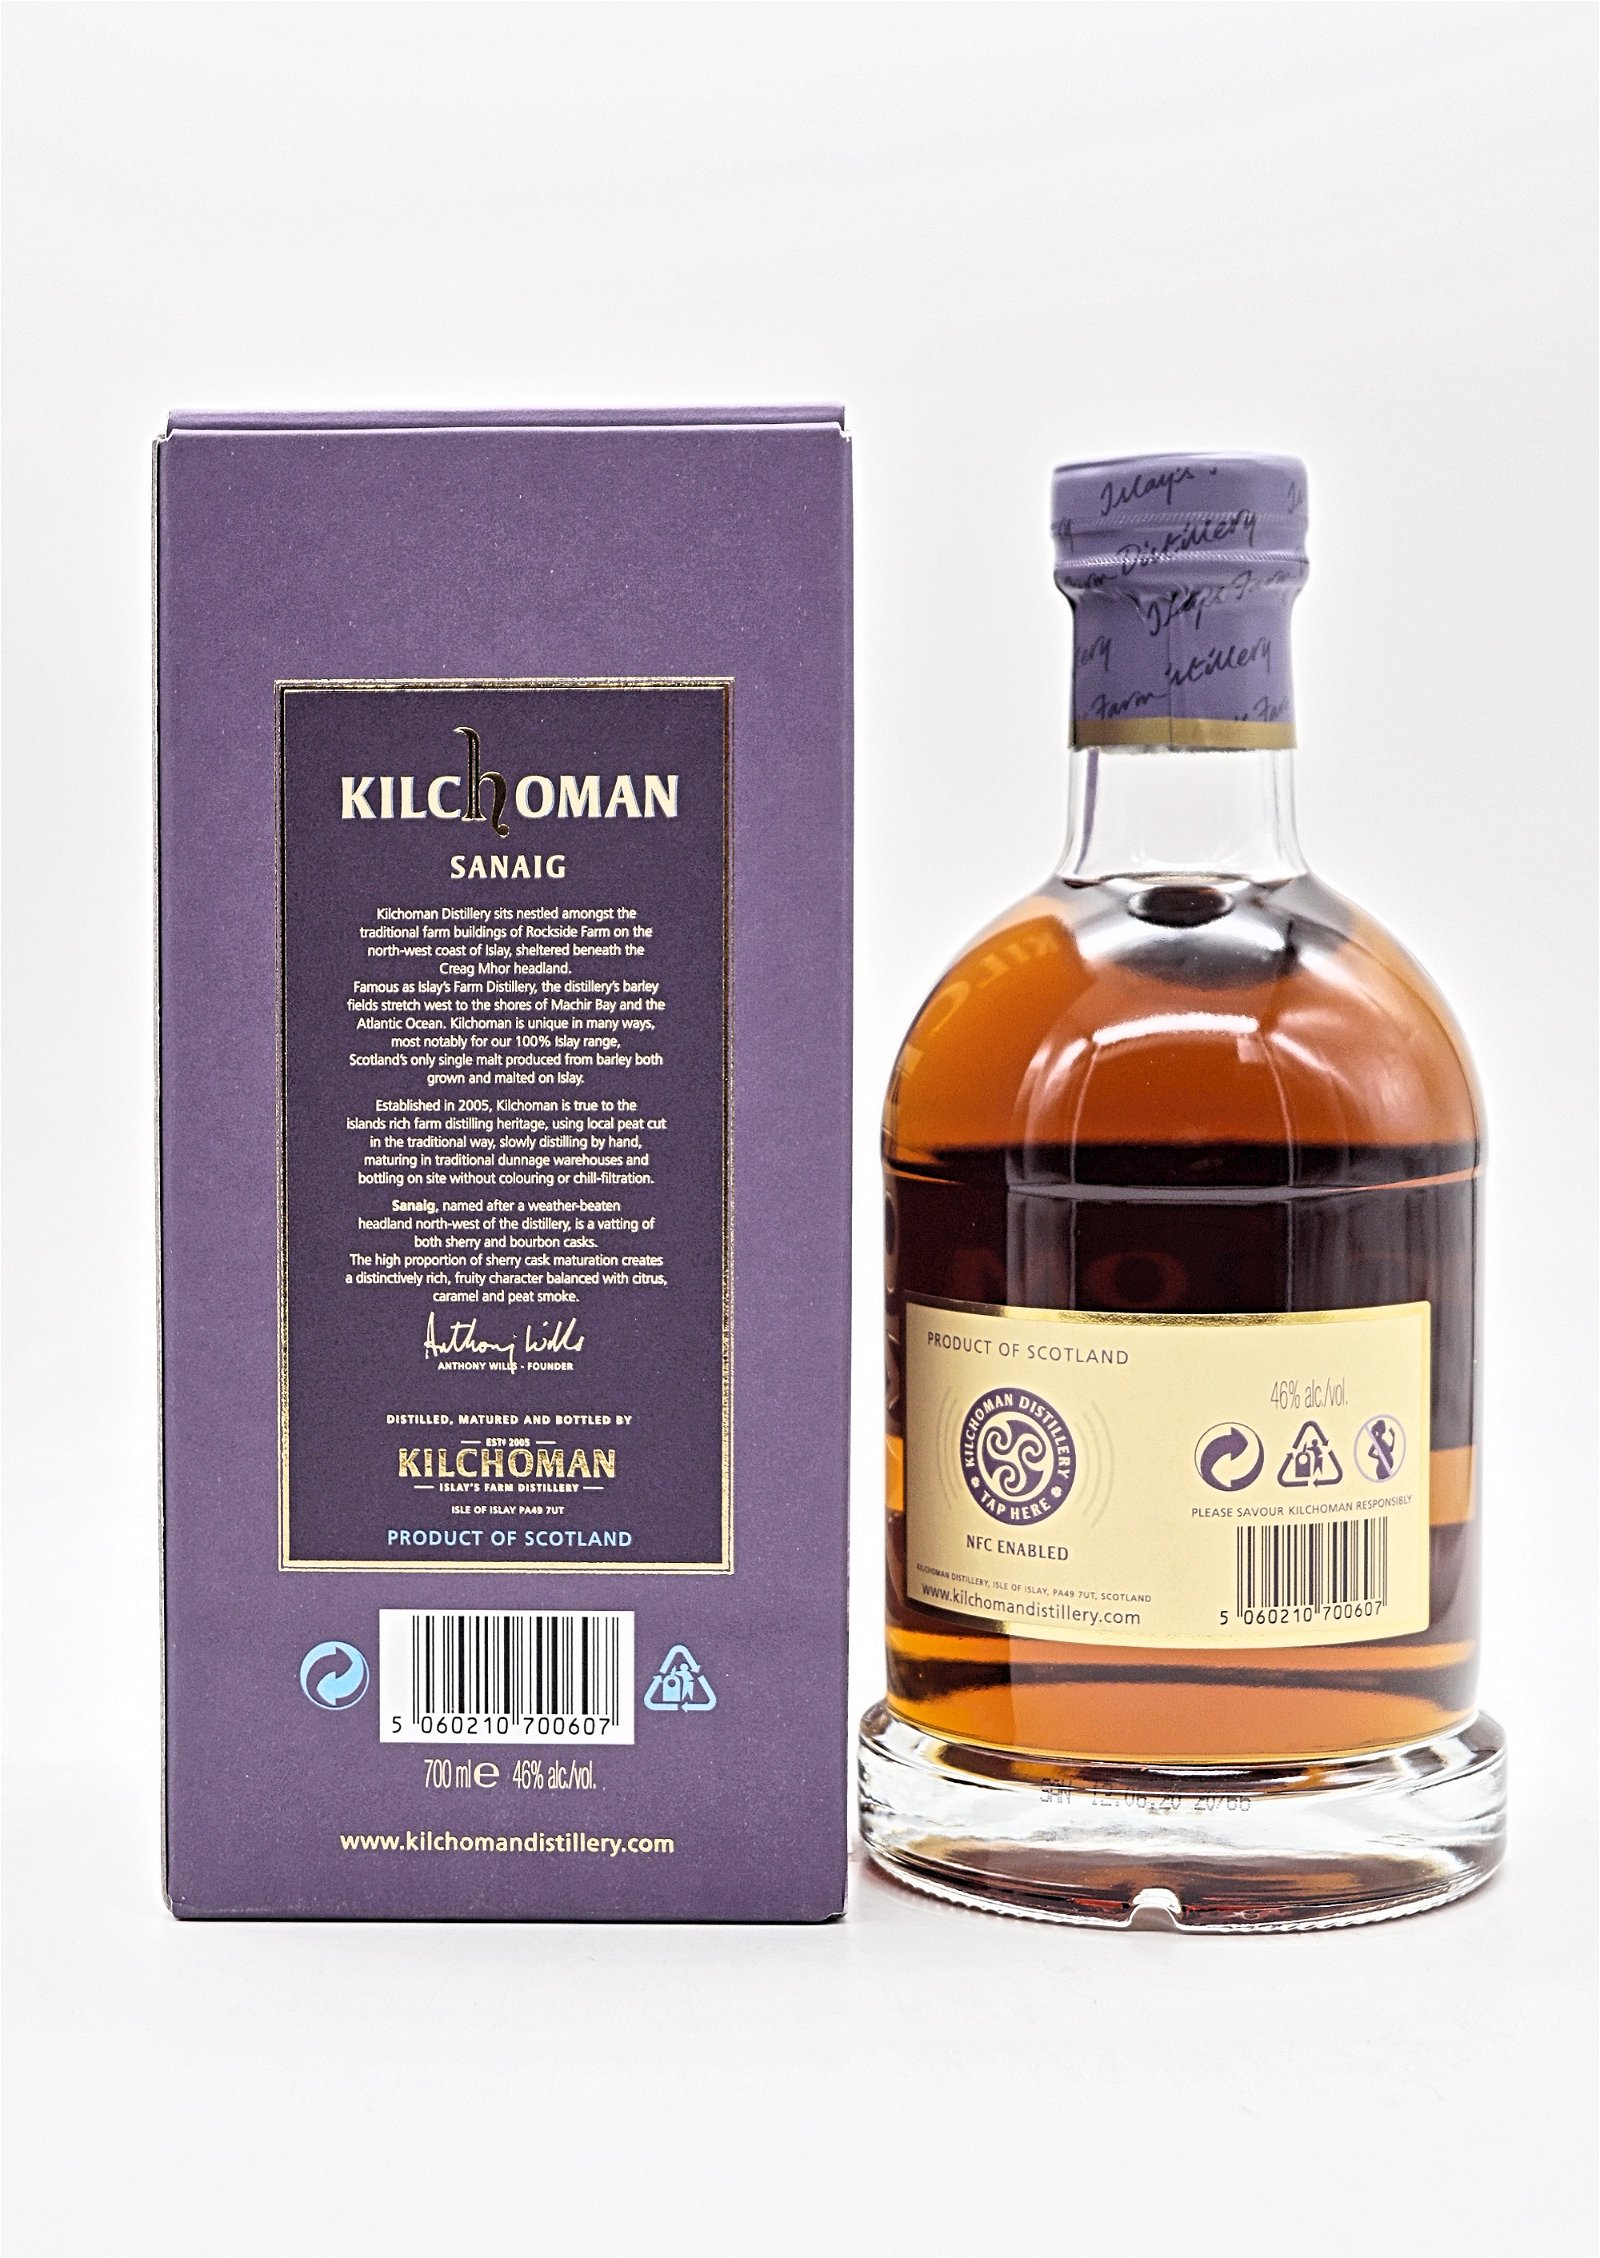 Kilchoman Sanaig Single Malt Scotch Whisky